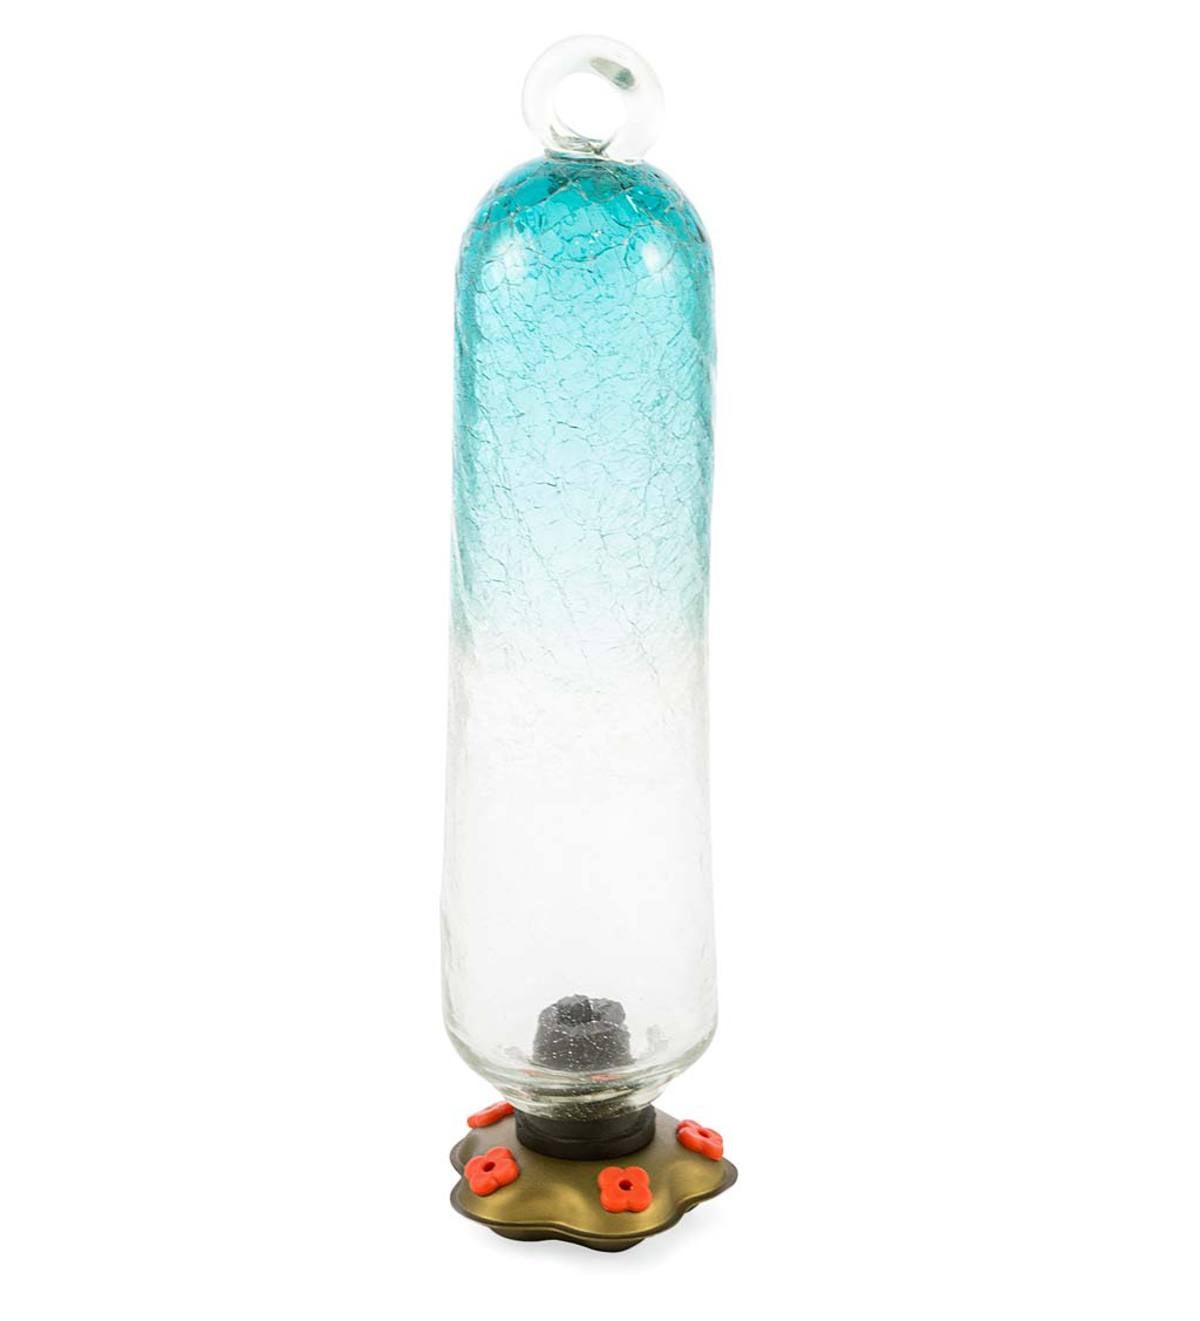 Recycled Glass Tall Aqua Hummingbird Feeder - Aqua